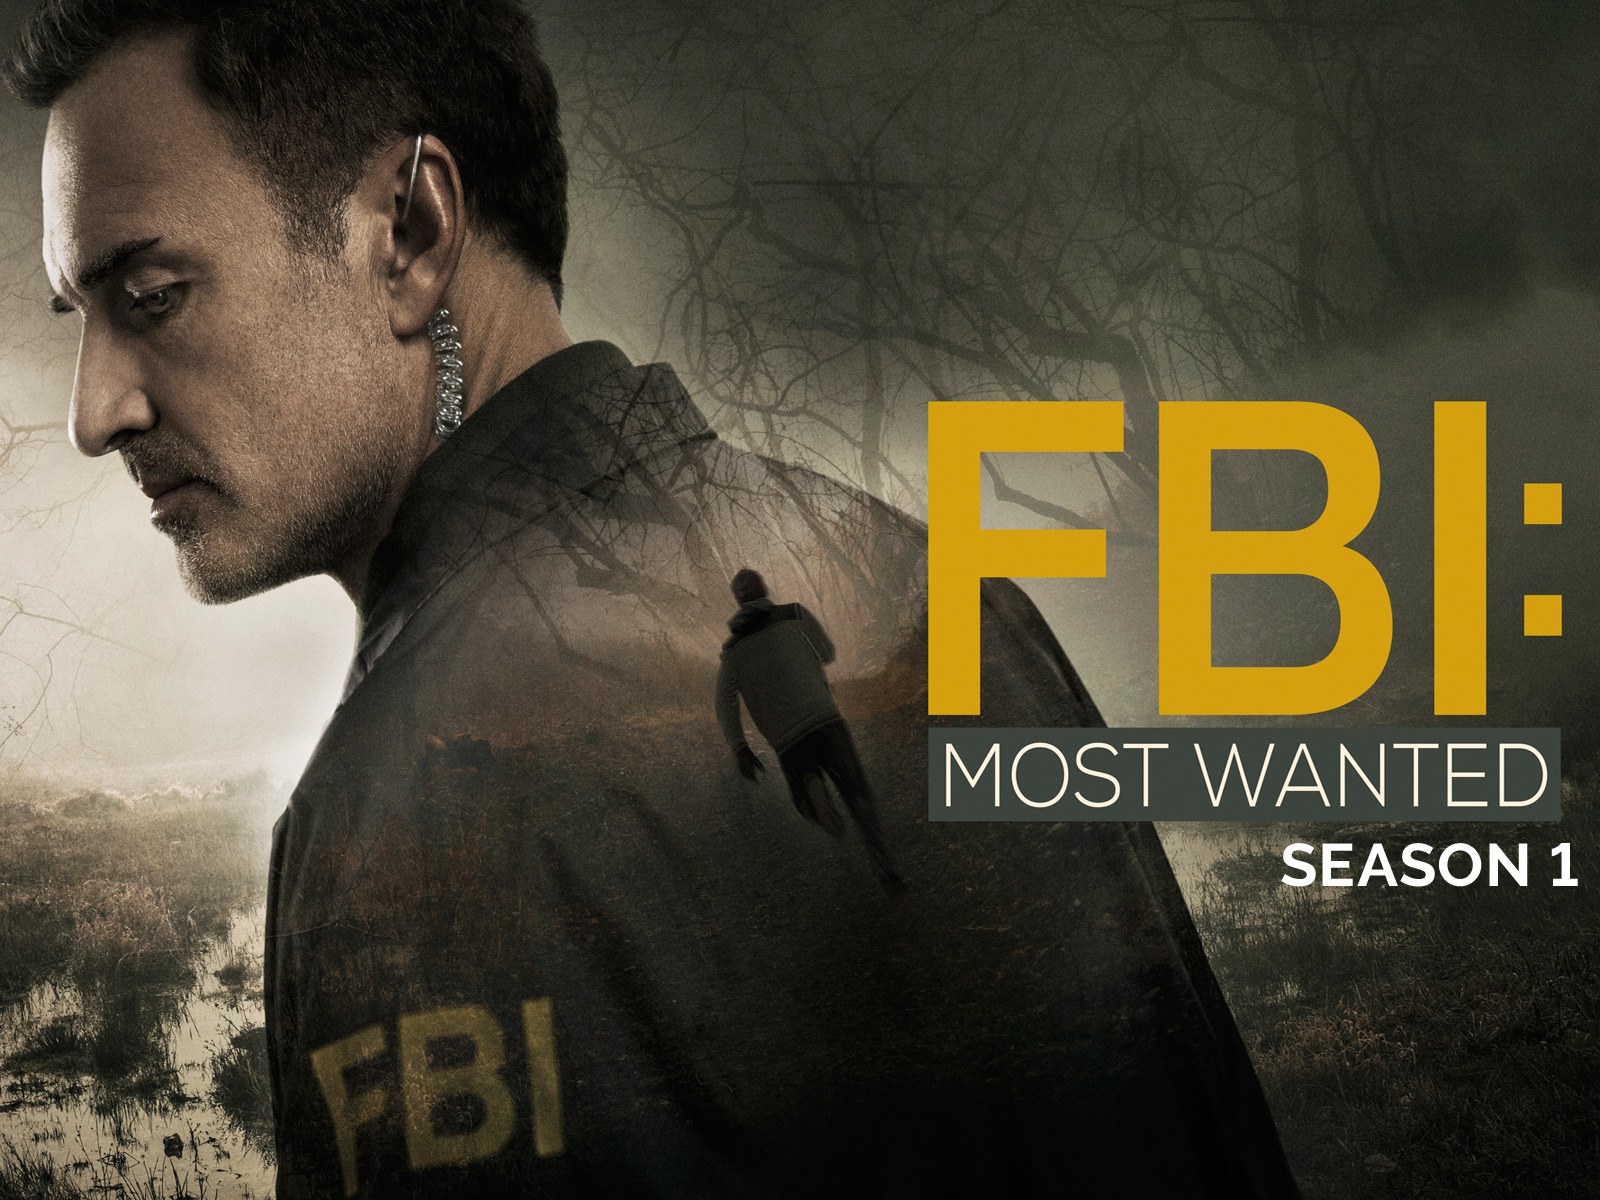 FBI Most Wanted Season 2 2021 Cast Changes!